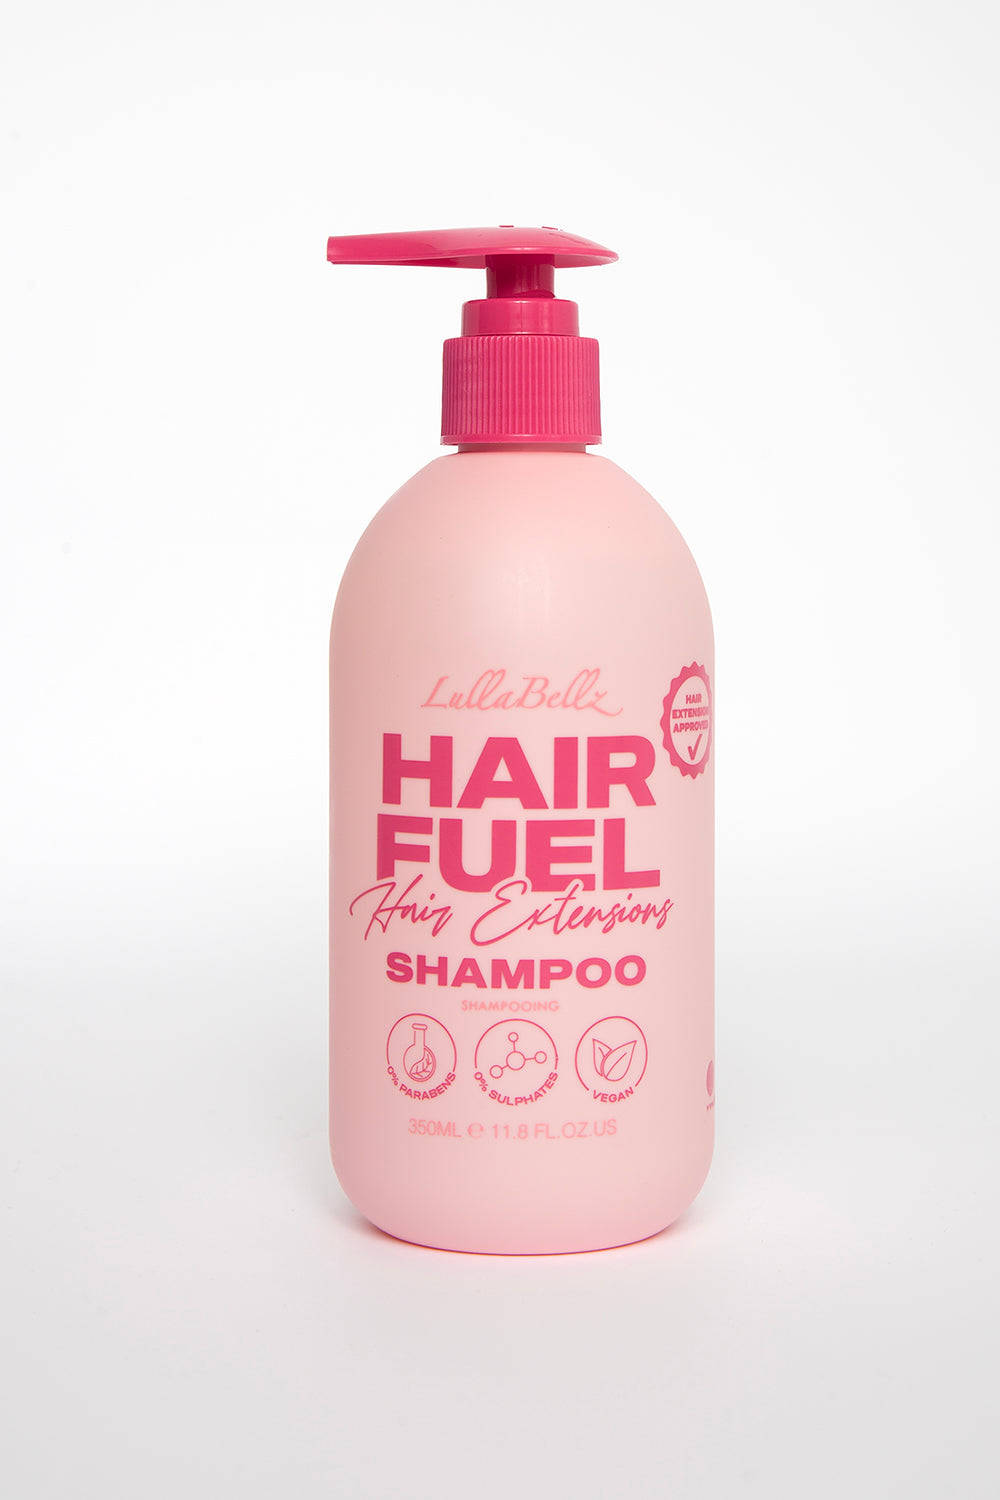 Lullabellz Hair Fuel Shampoo 350ml